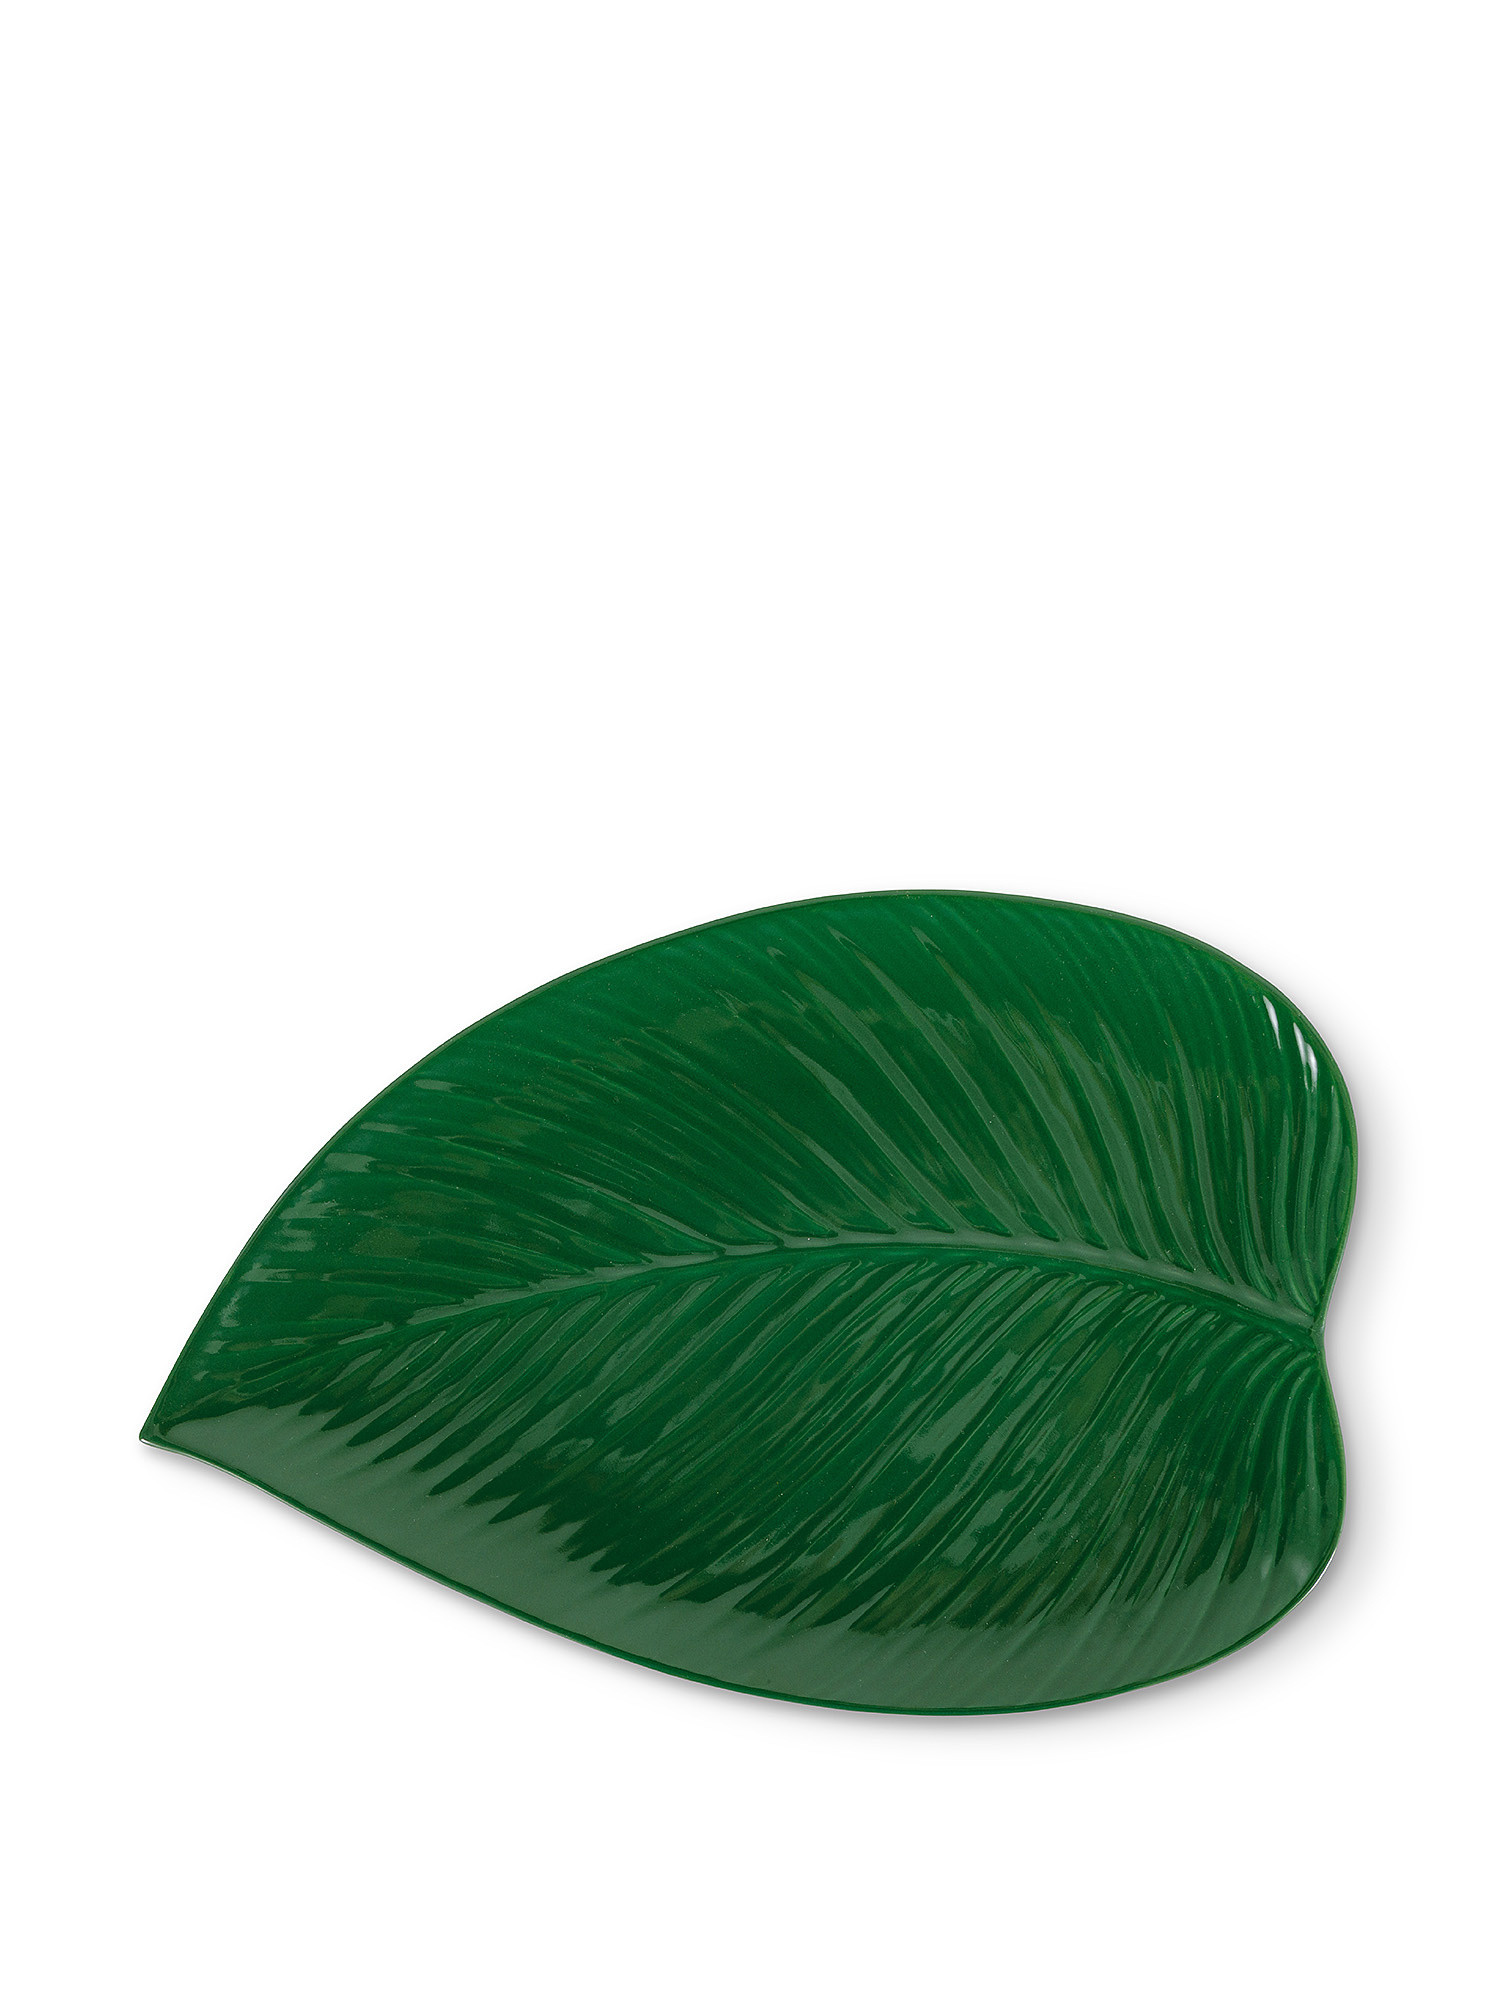 New bone china leaf serving plate, Green, large image number 0